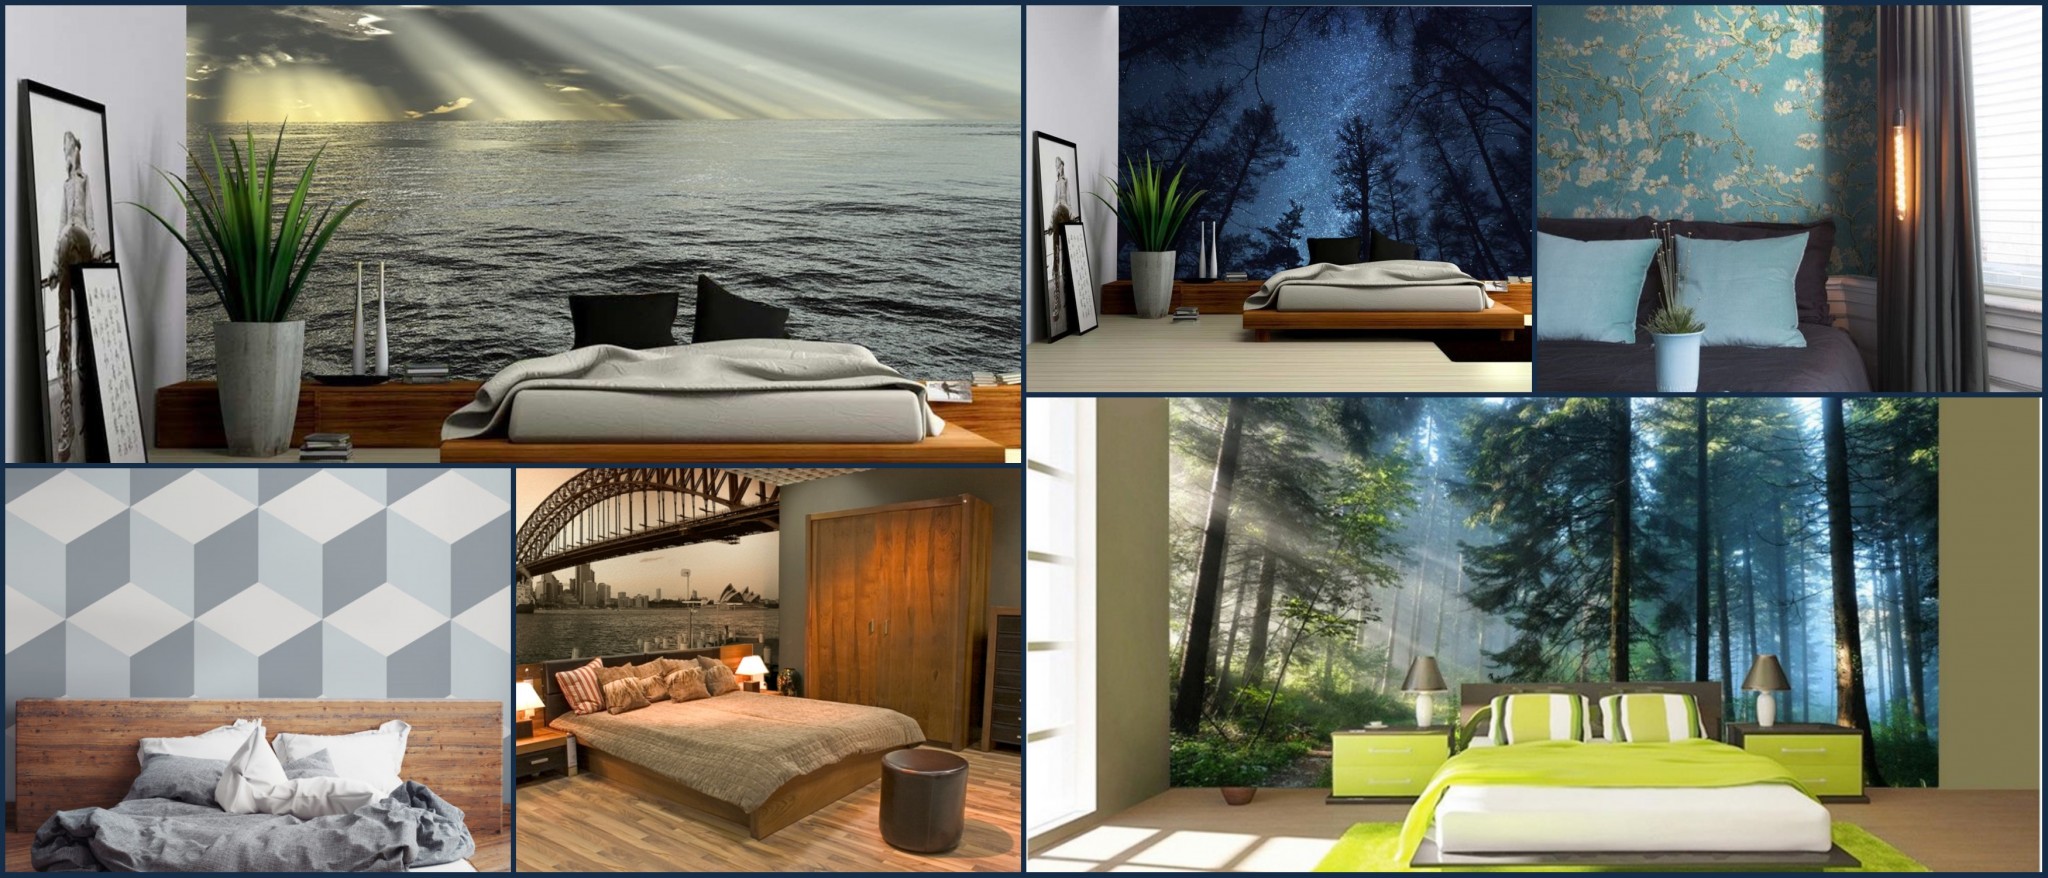 carta da parati 3d,mobilia,natura,interior design,camera,camera da letto